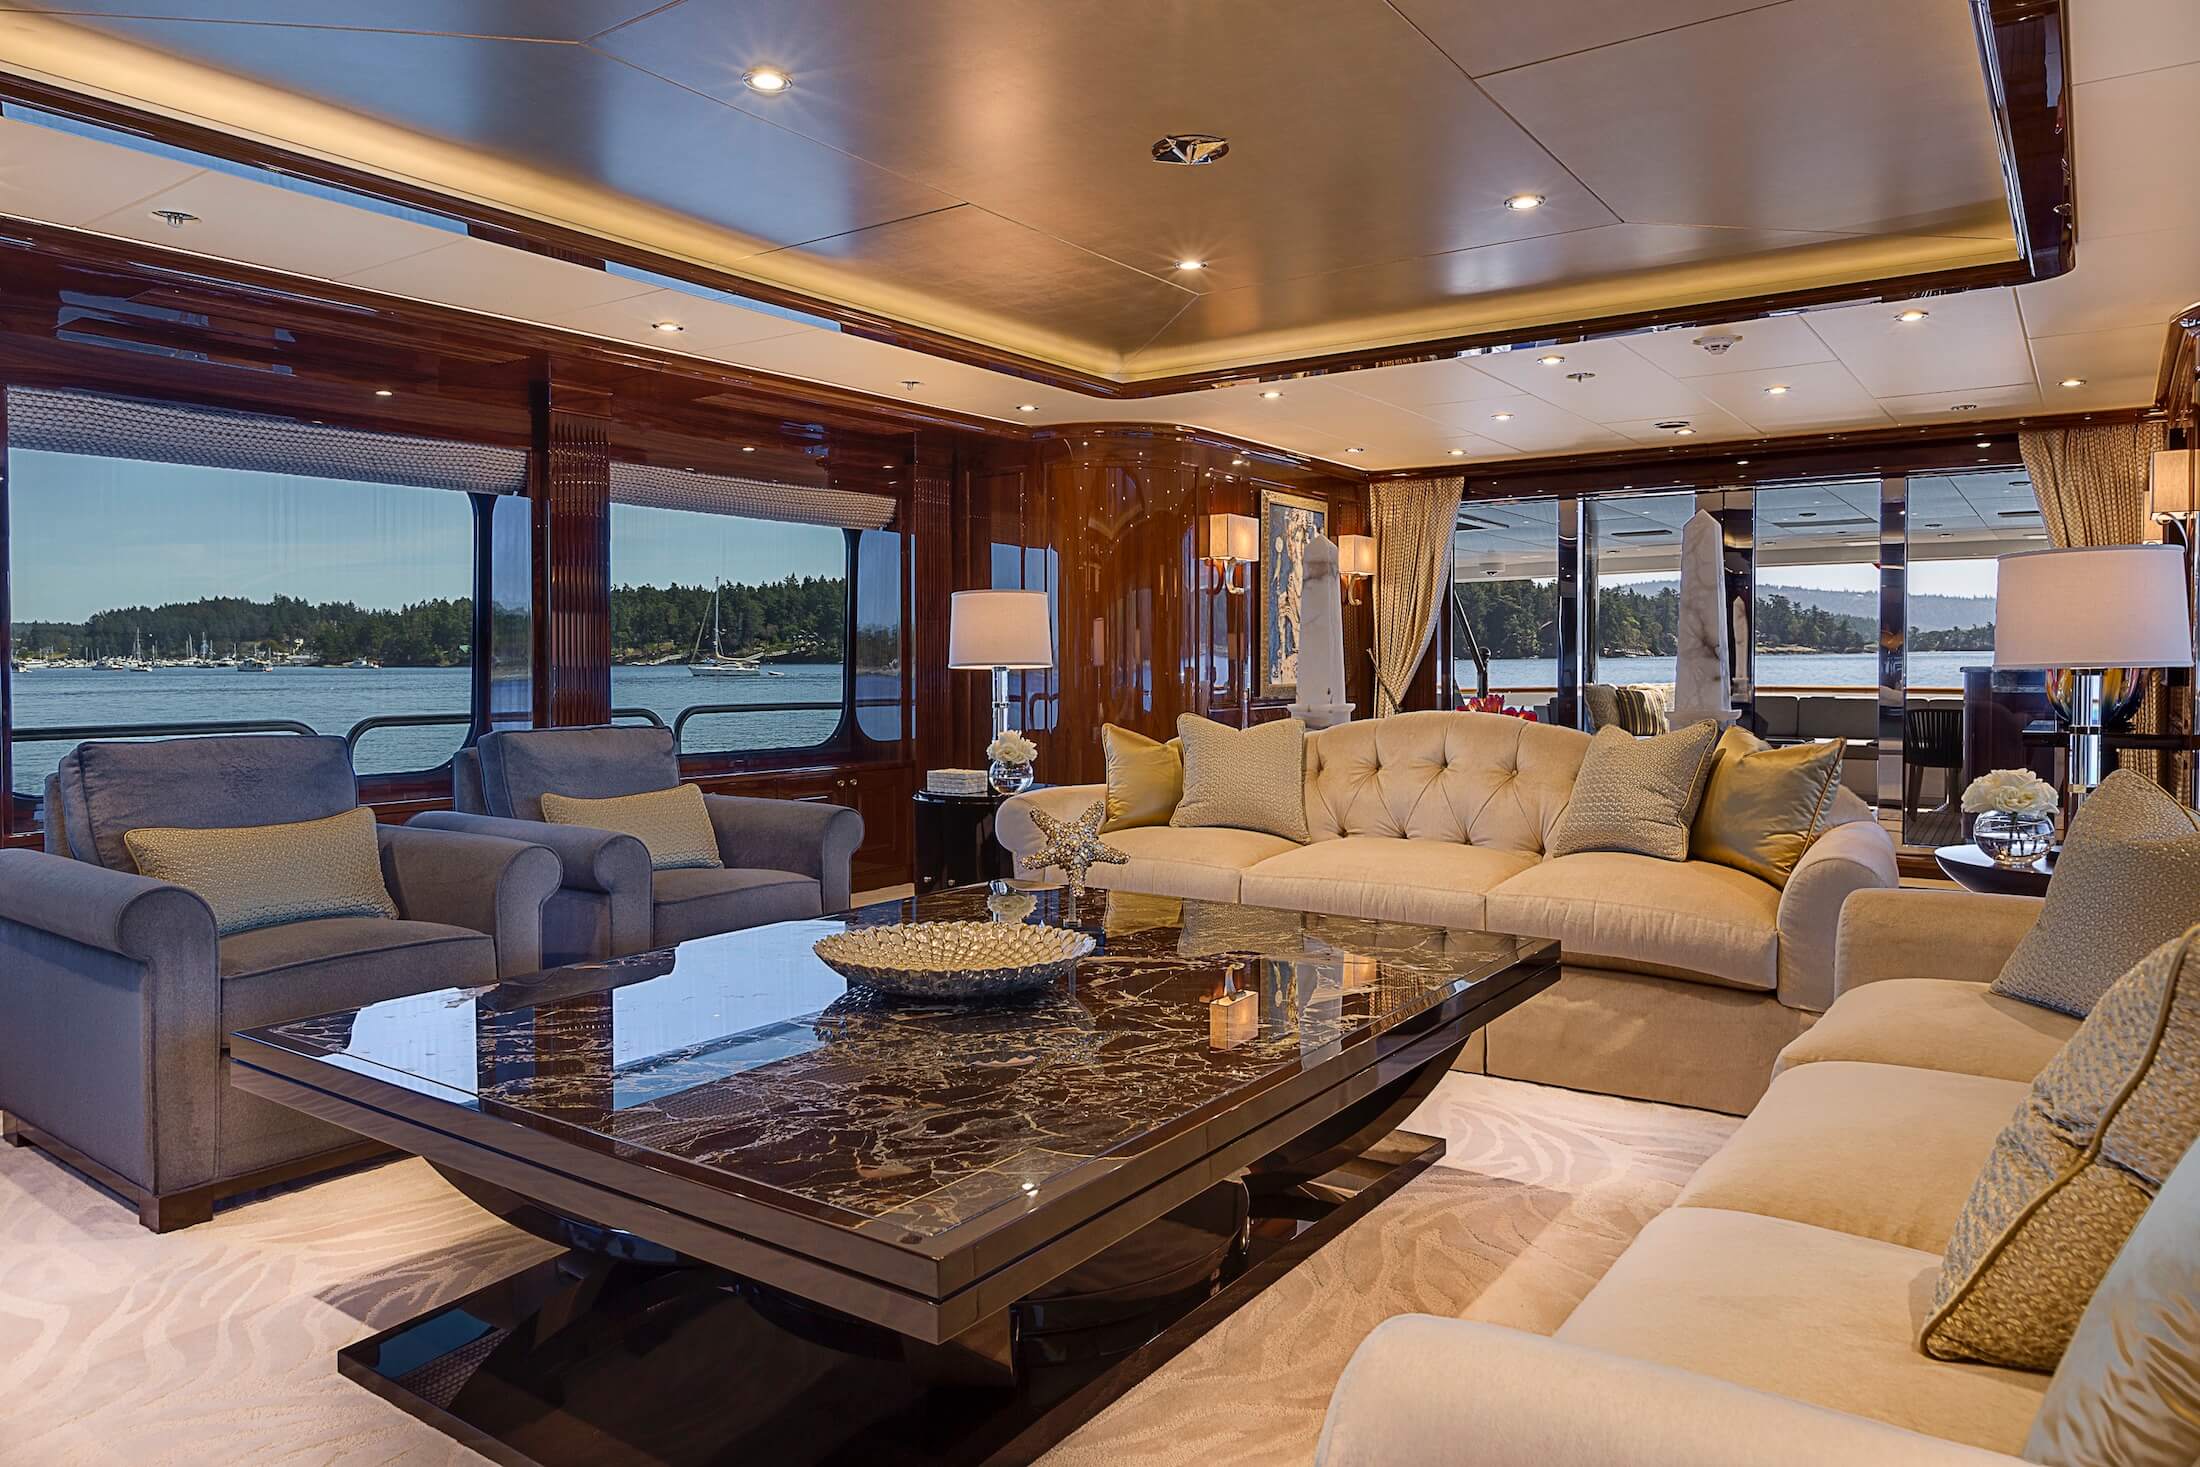 D'Natalin Luxury Yacht seating area